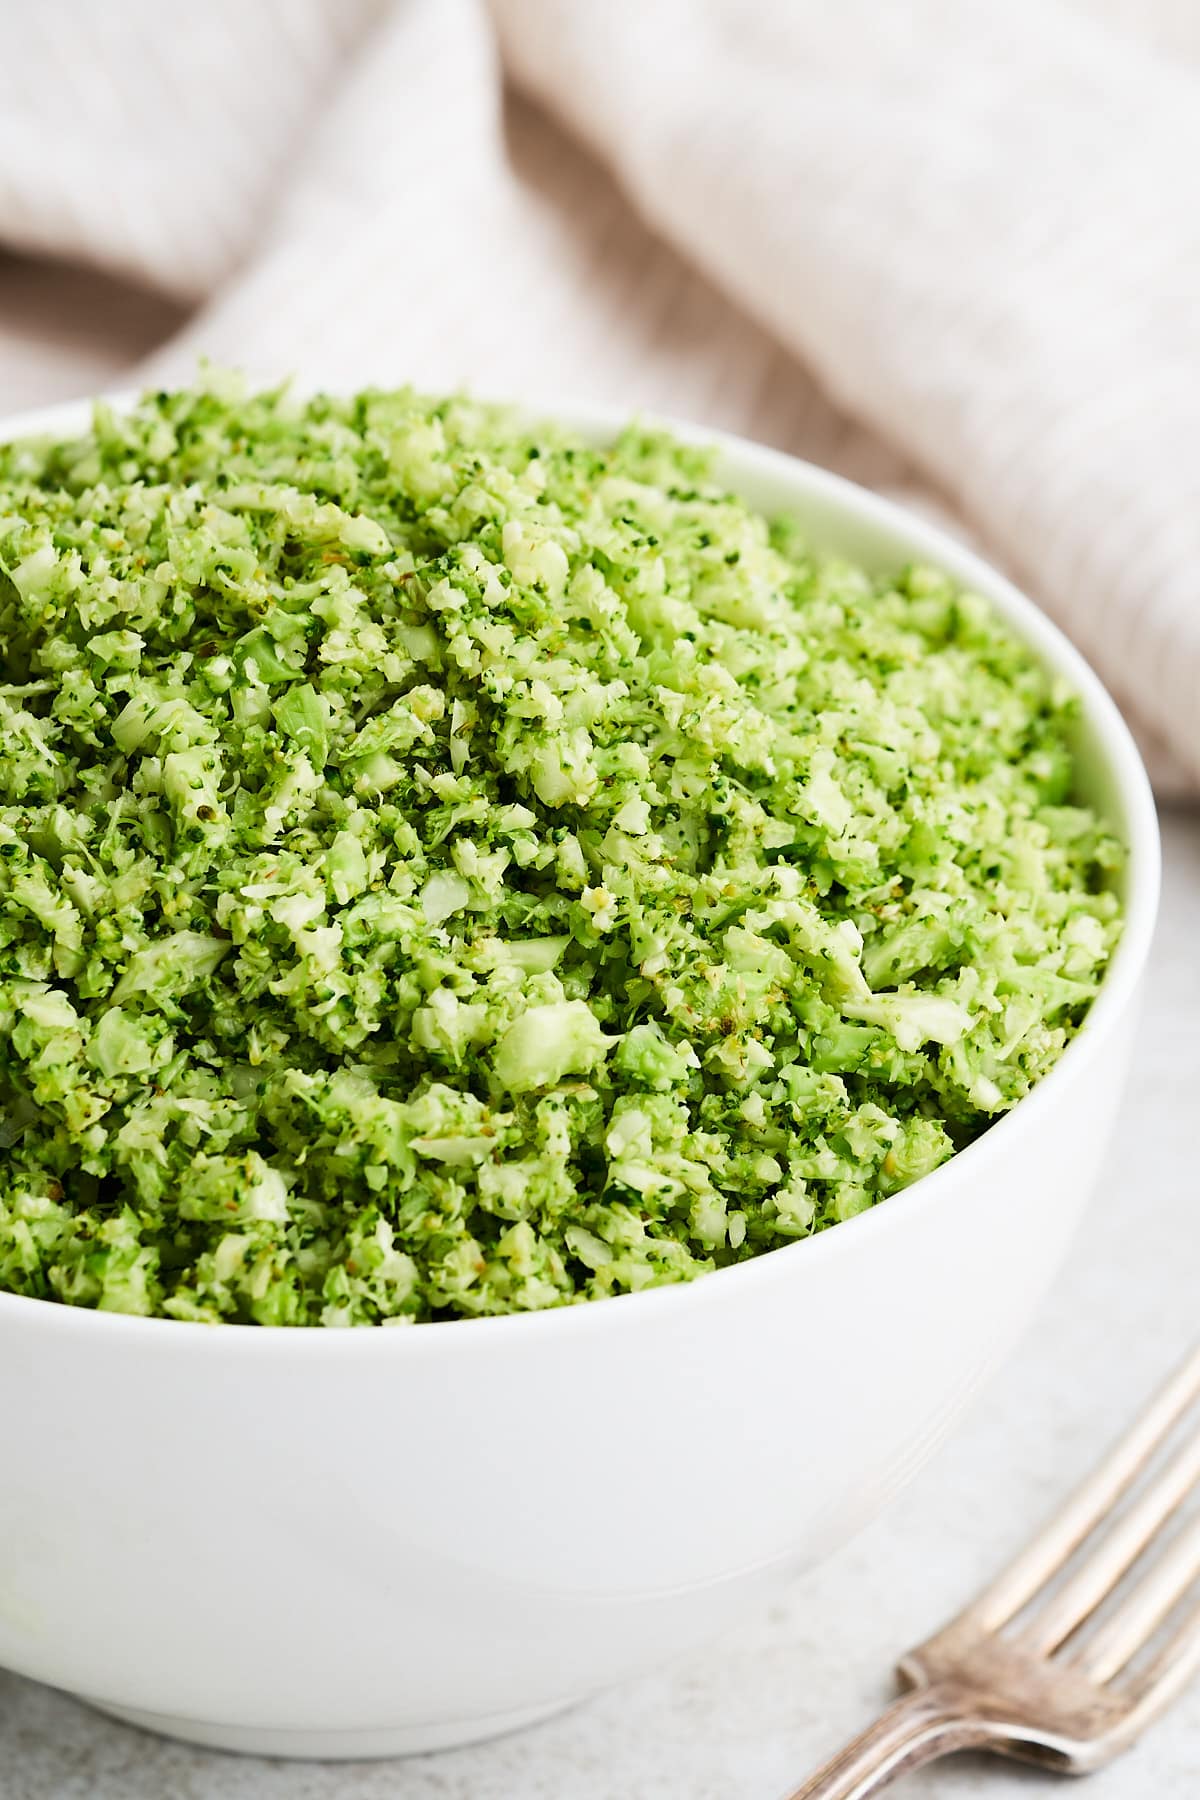 How to make broccoli rice.